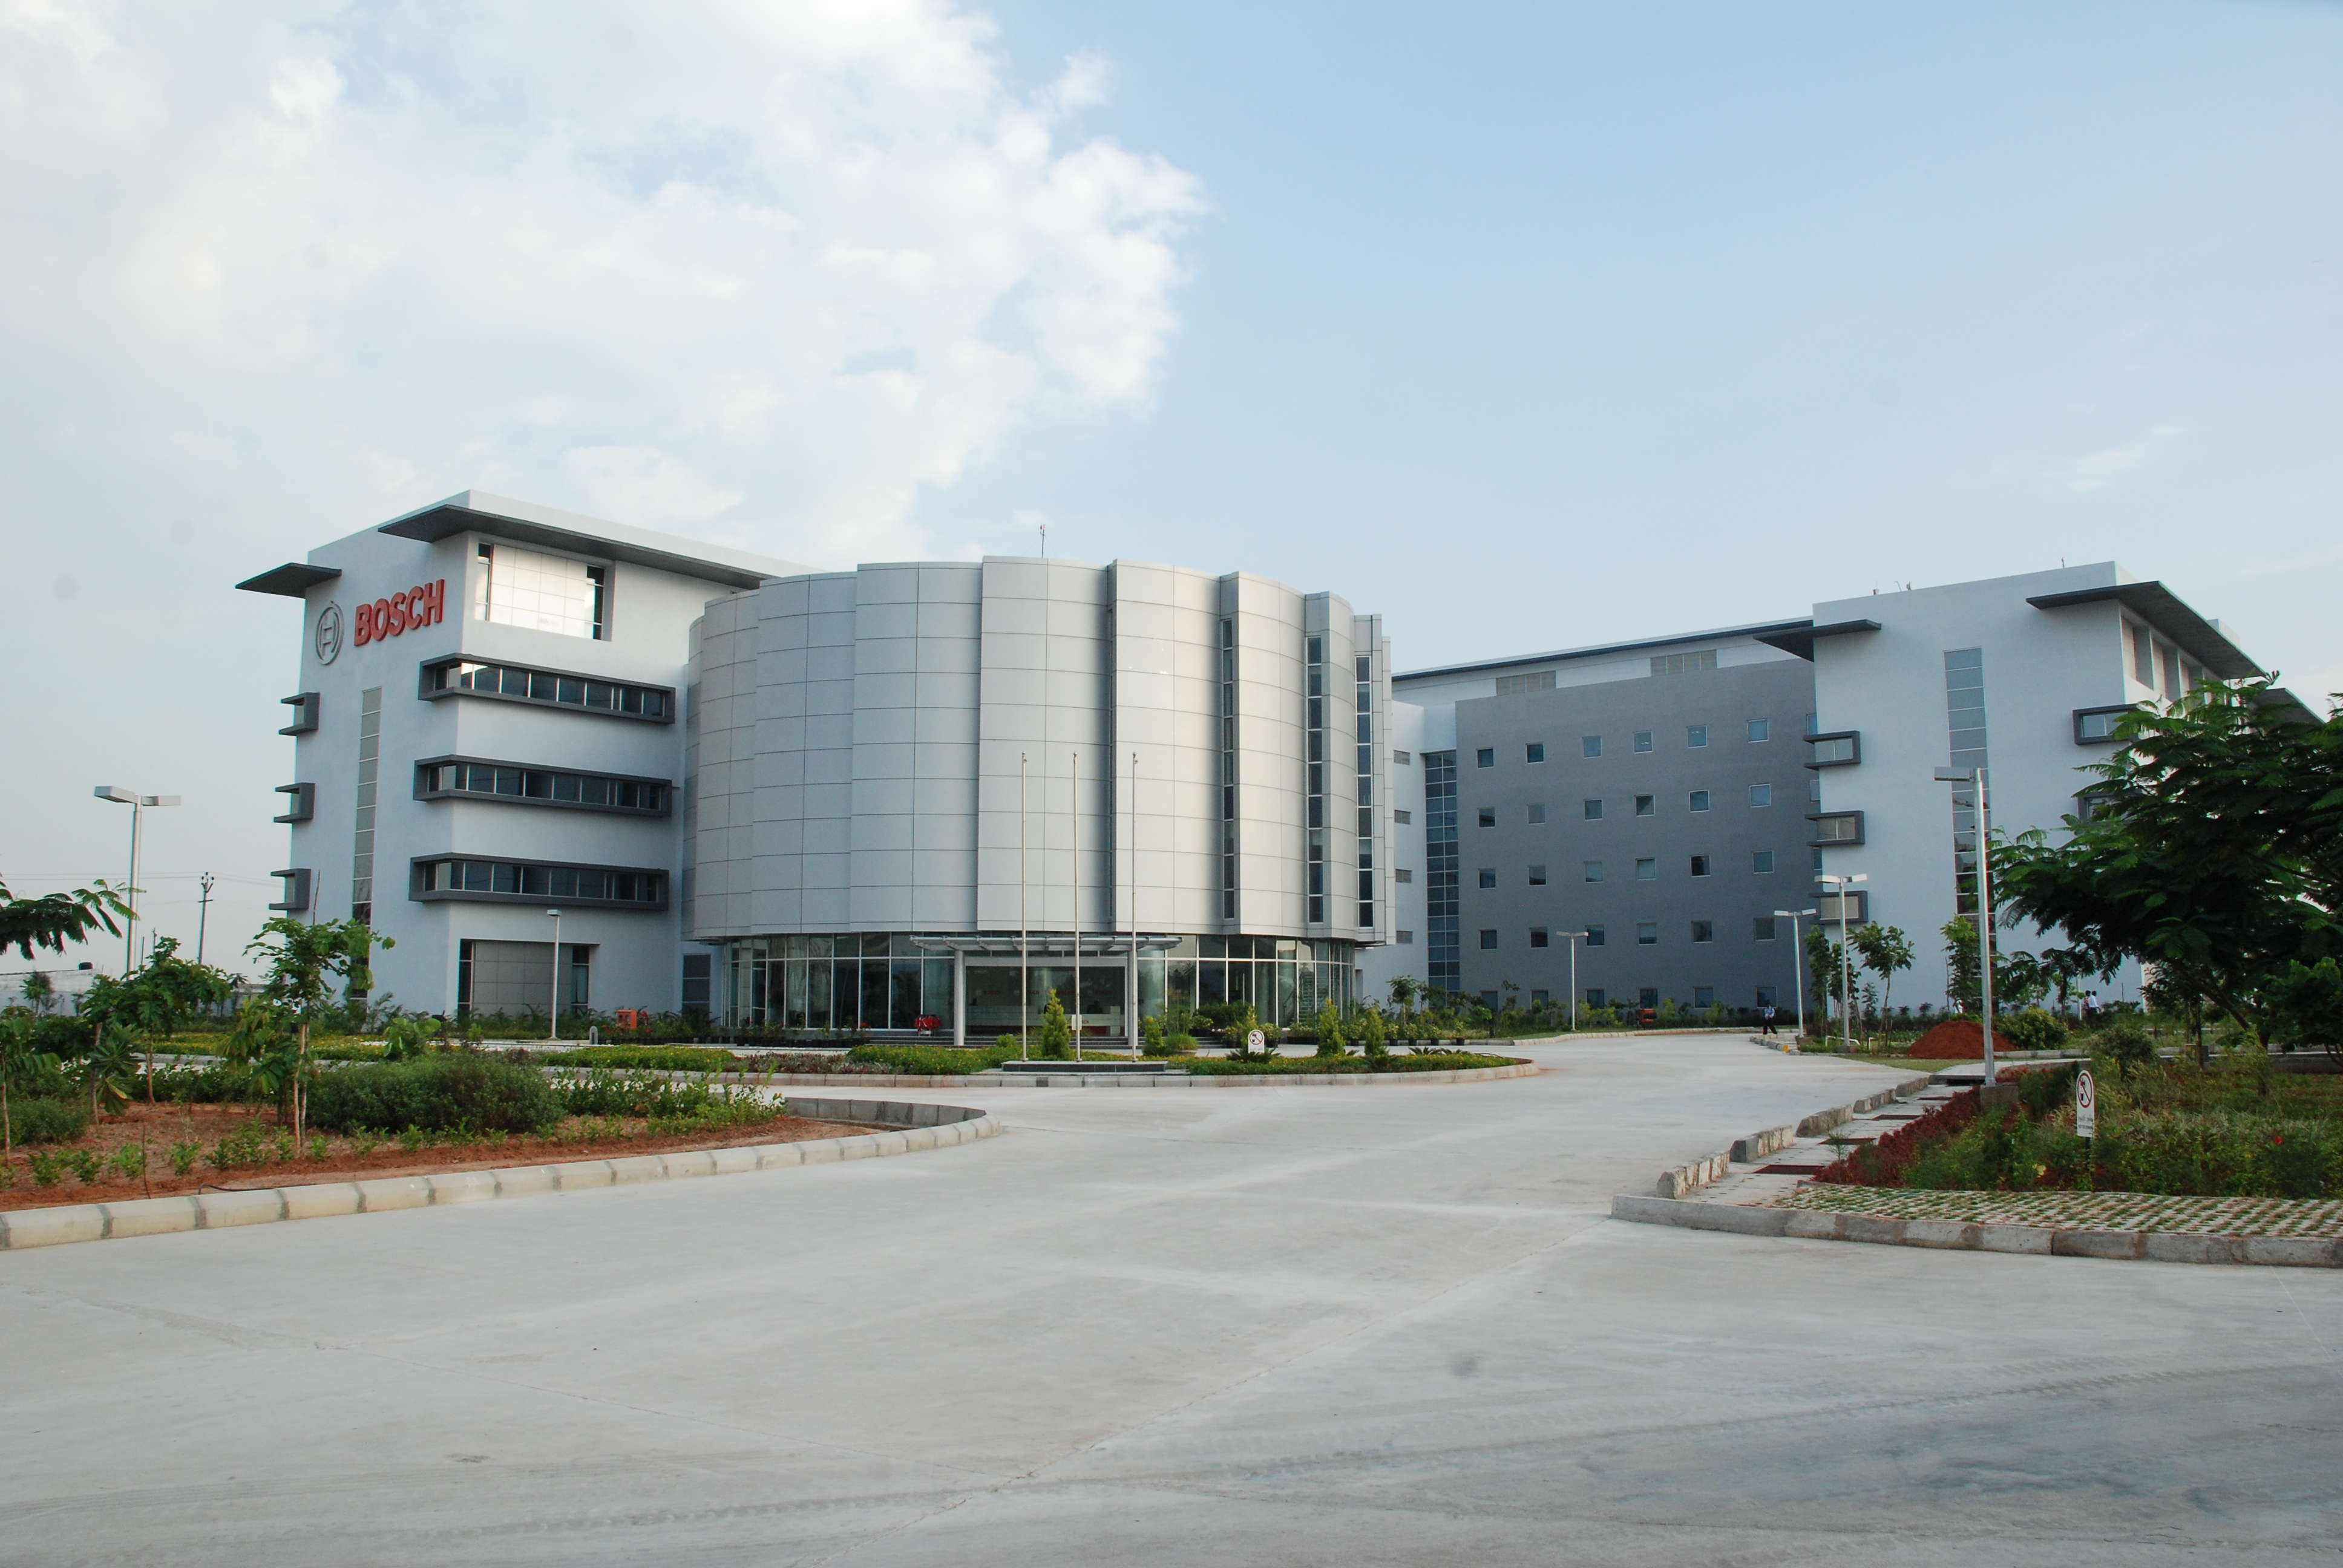 Robert Bosch Engineering and Business Solutions Pvt Ltd (RBEI) Coimbatore campus.